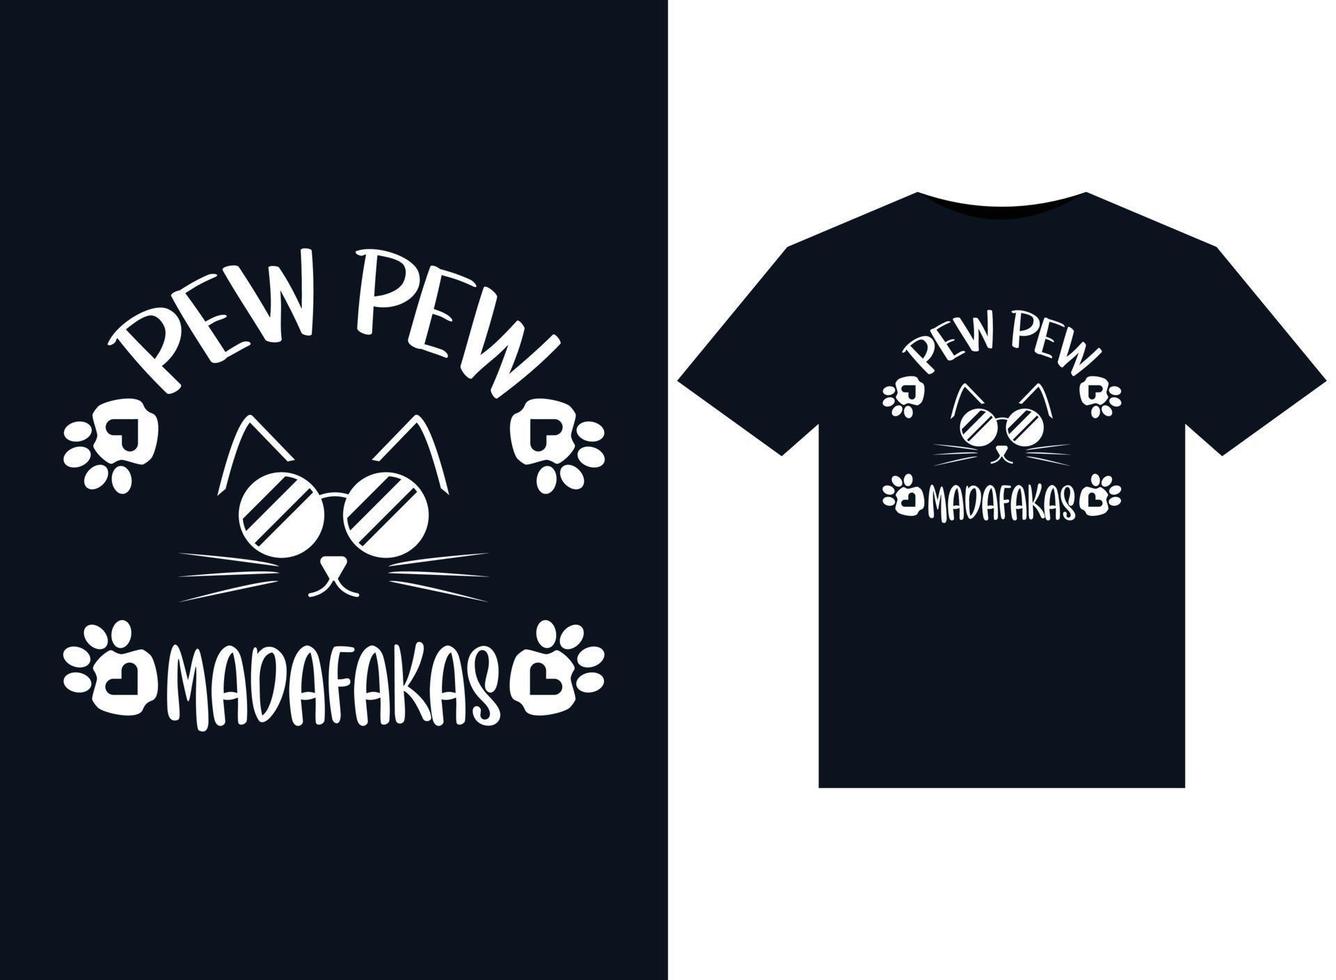 PEW PEW MADAFAKAS illustrations for print-ready T-Shirts design vector